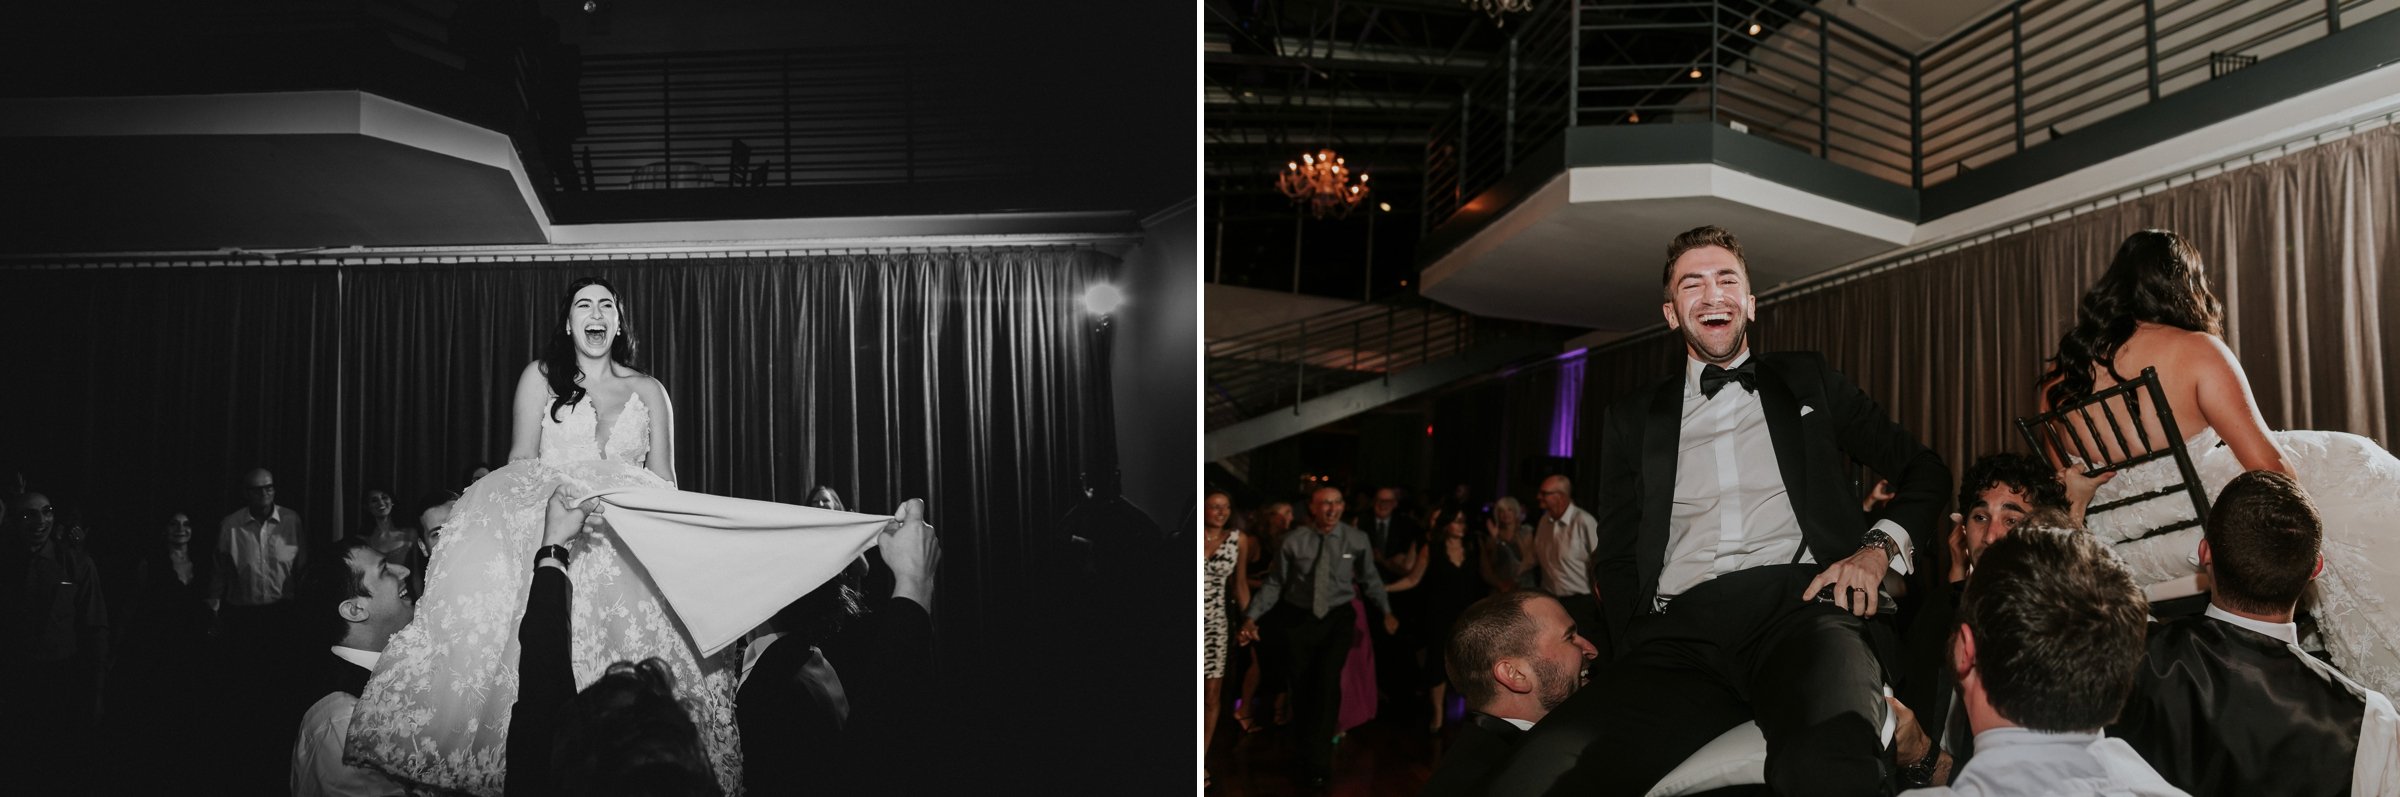 Tribeca-Rooftop-Modern-Documentary-Wedding-Photographer-125.jpg